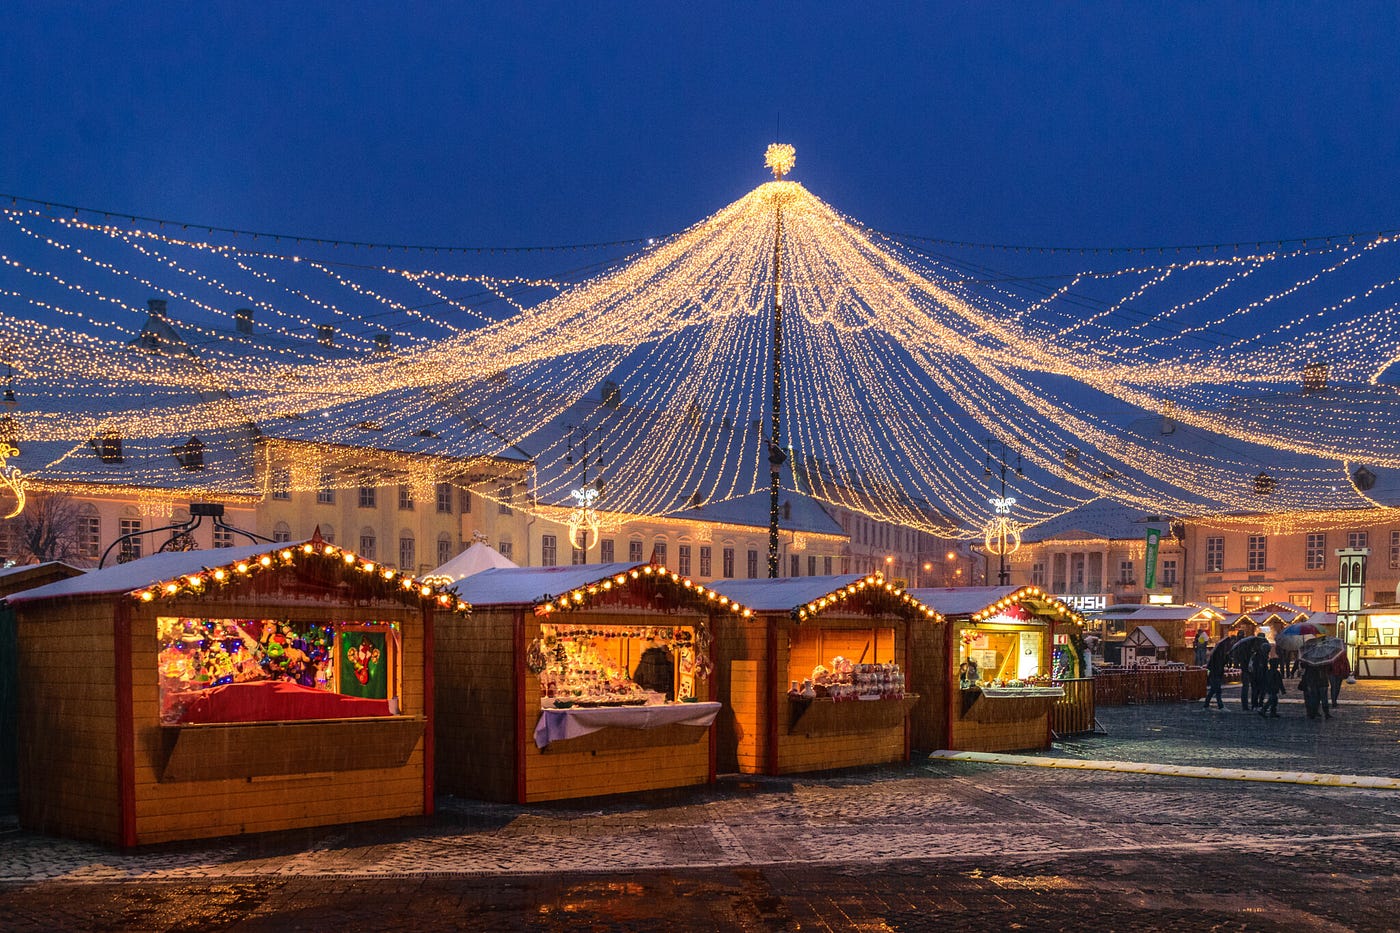 Christmas Market in Sibiu, Transylvania Romania. Beautifull sunset